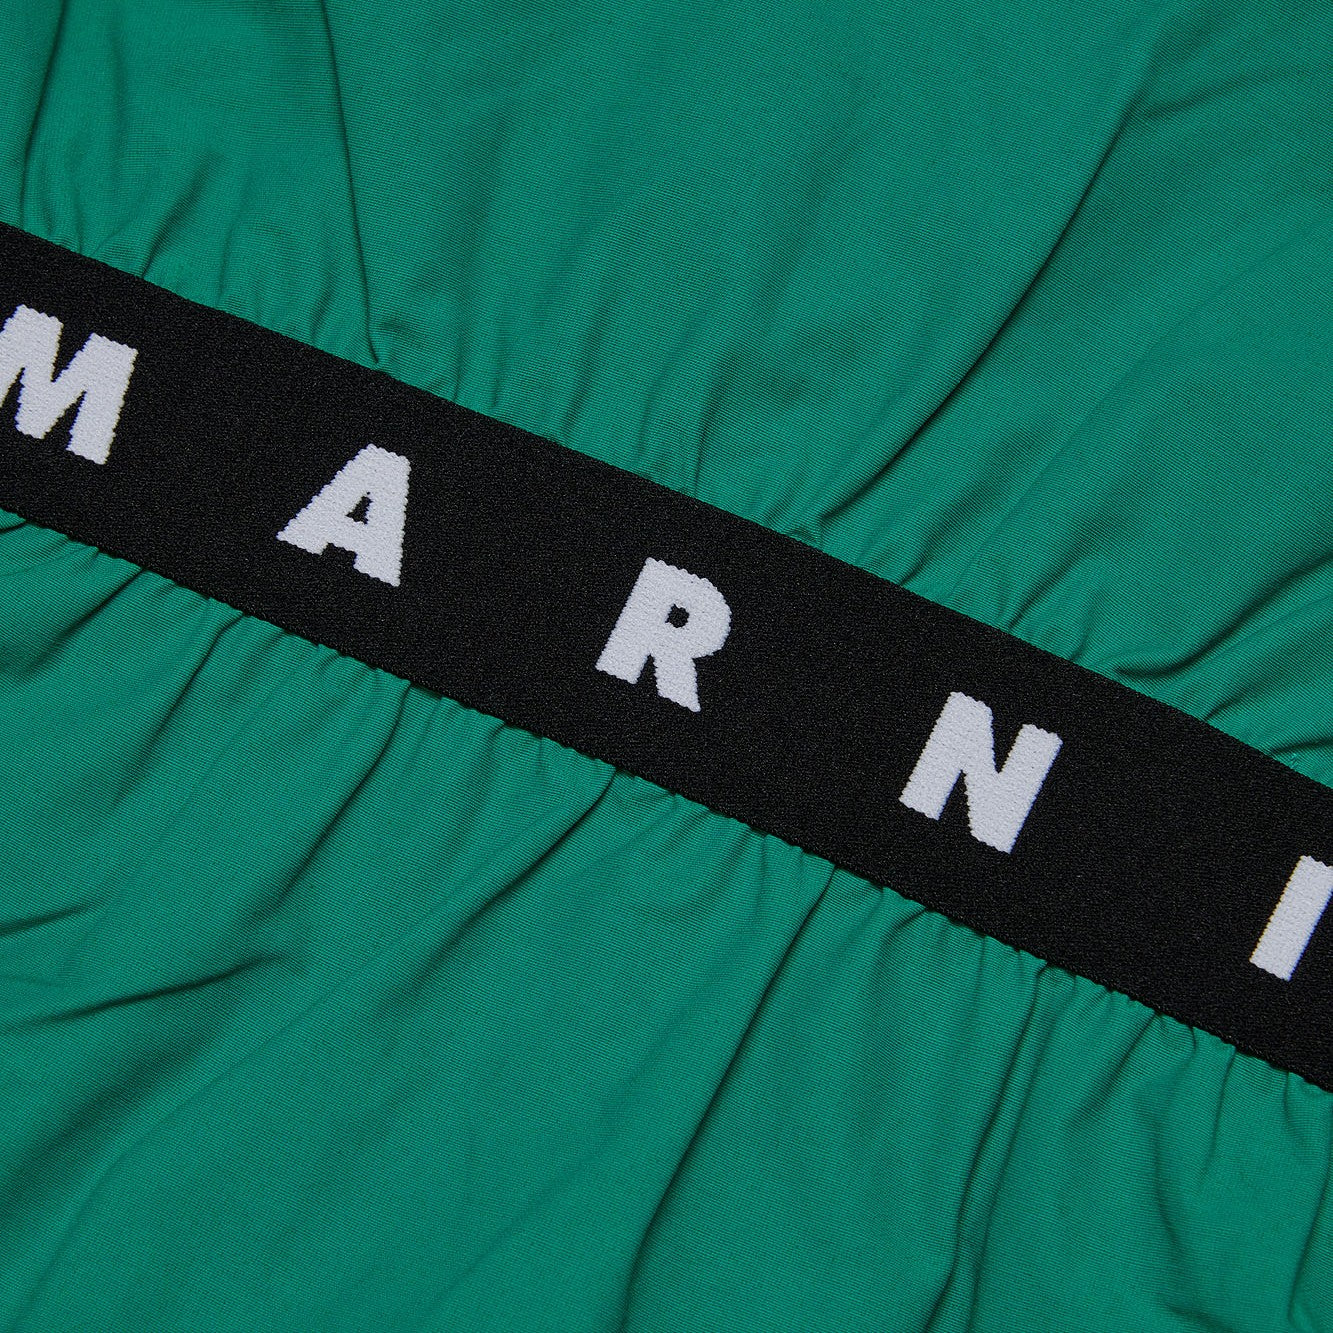 Marni Logo Jacket - Emerald Green